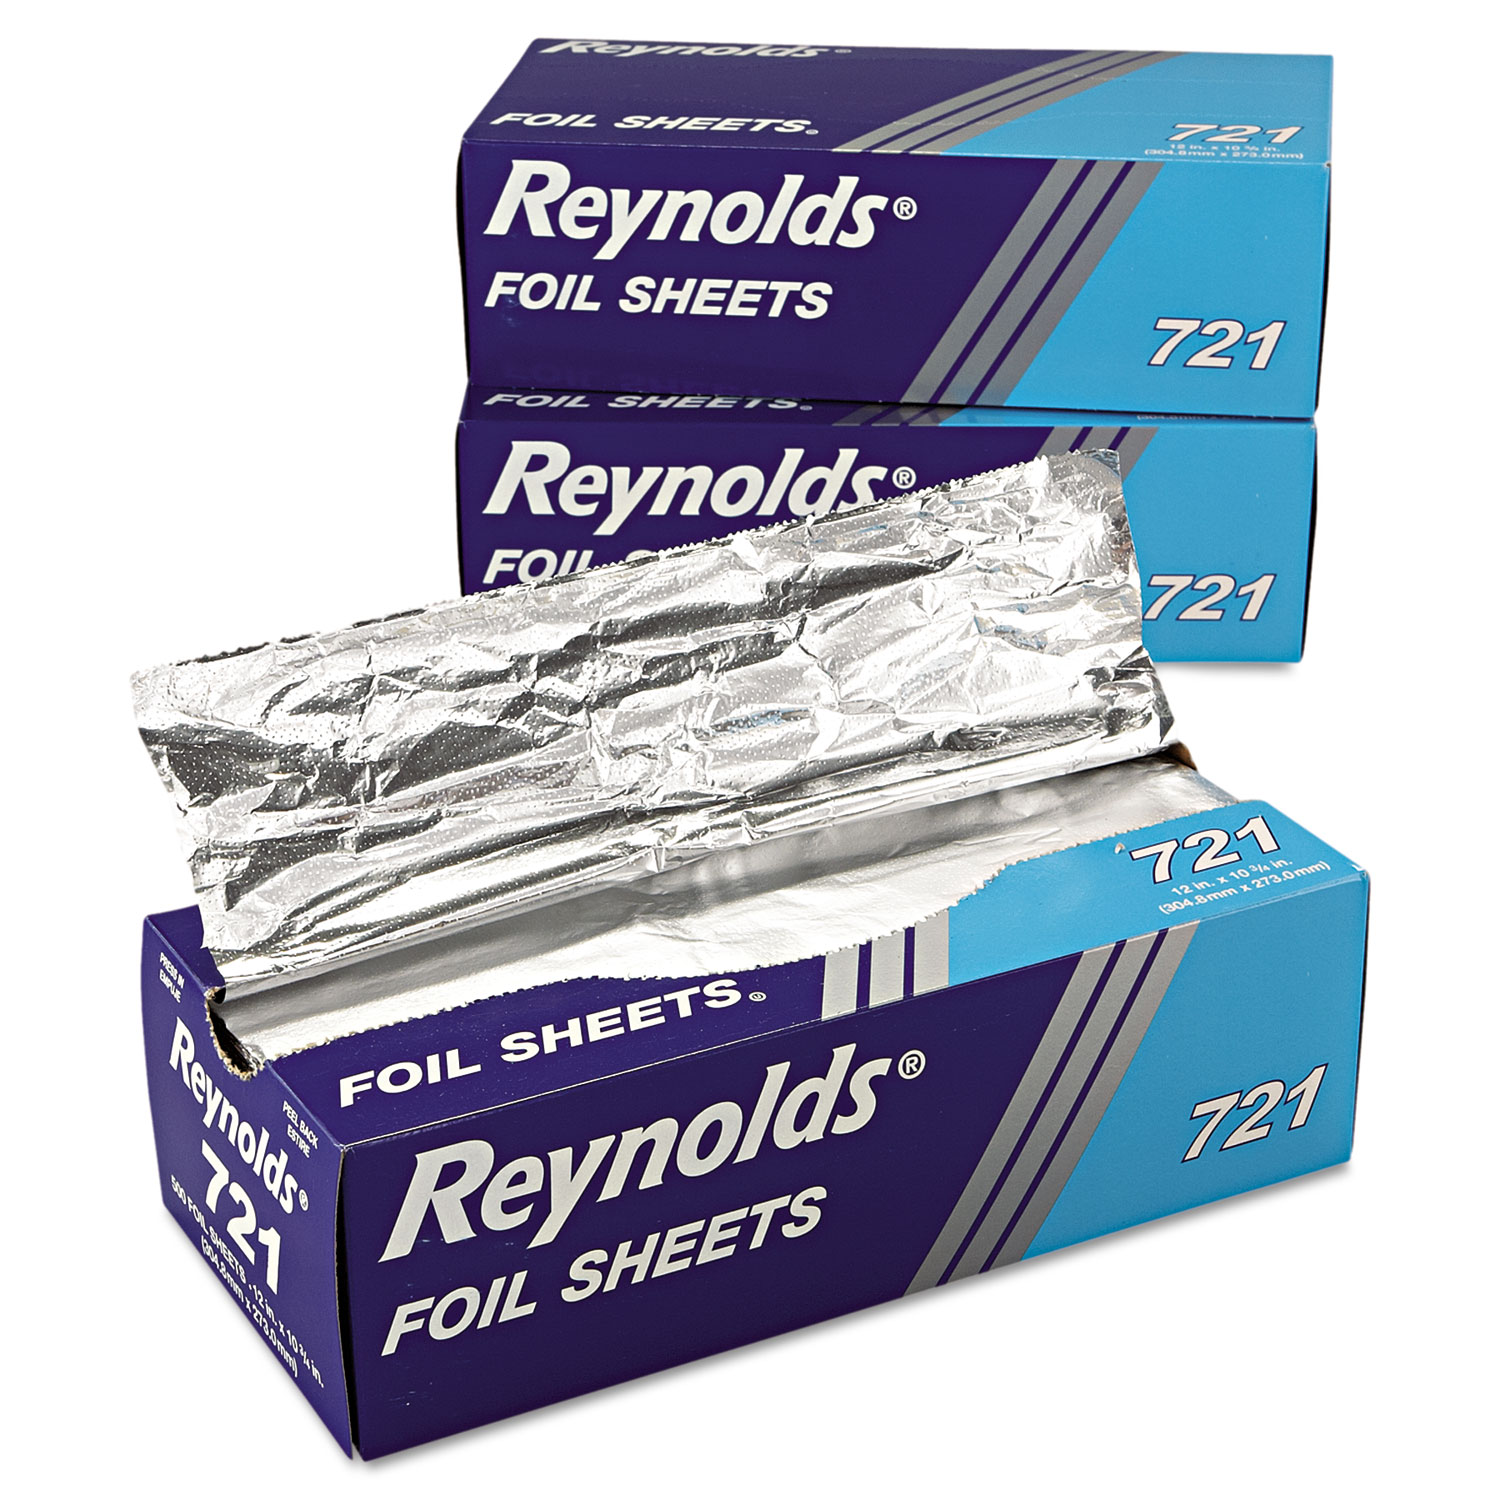 Interfolded Aluminum Foil Sheets, 12 x 10 3/4, Silver, 500/Box, 6 Boxes/Carton